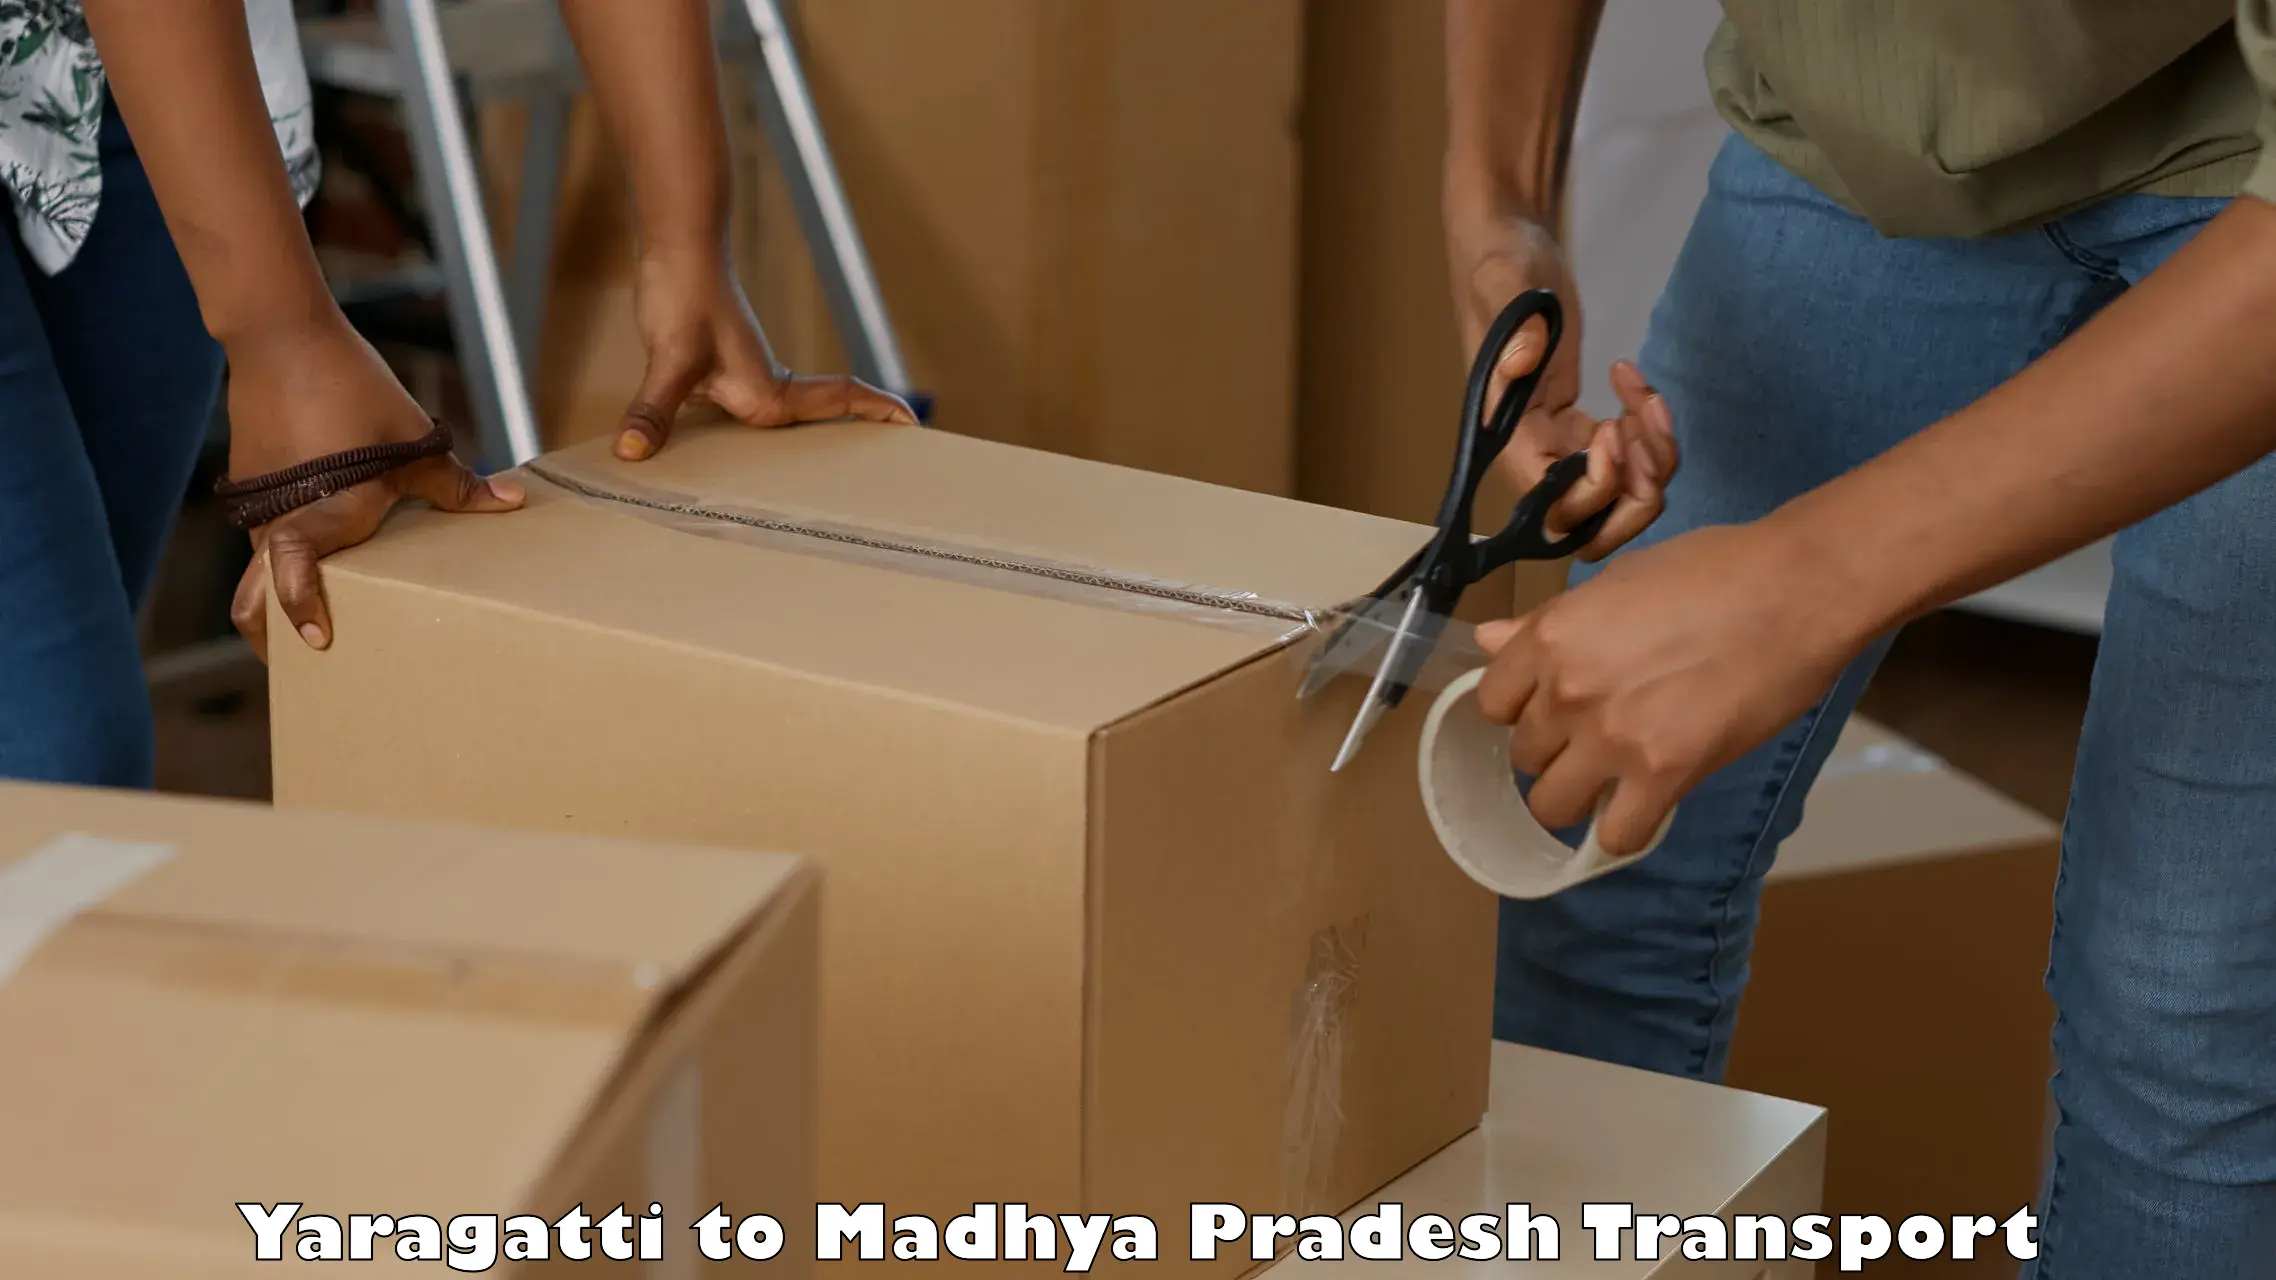 Truck transport companies in India in Yaragatti to Mundi